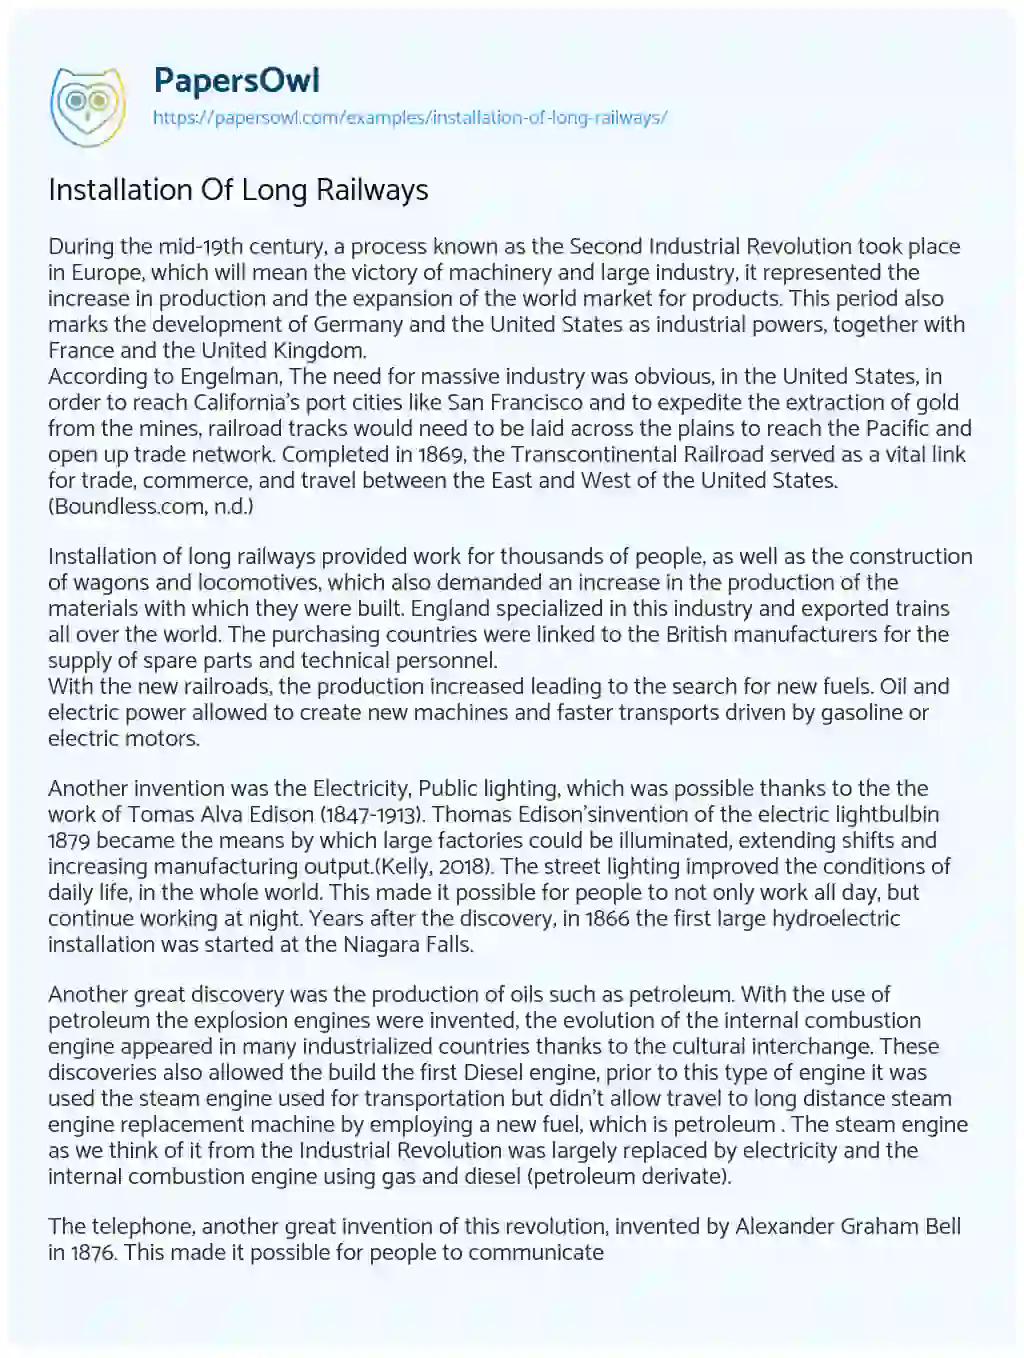 Installation of Long Railways essay